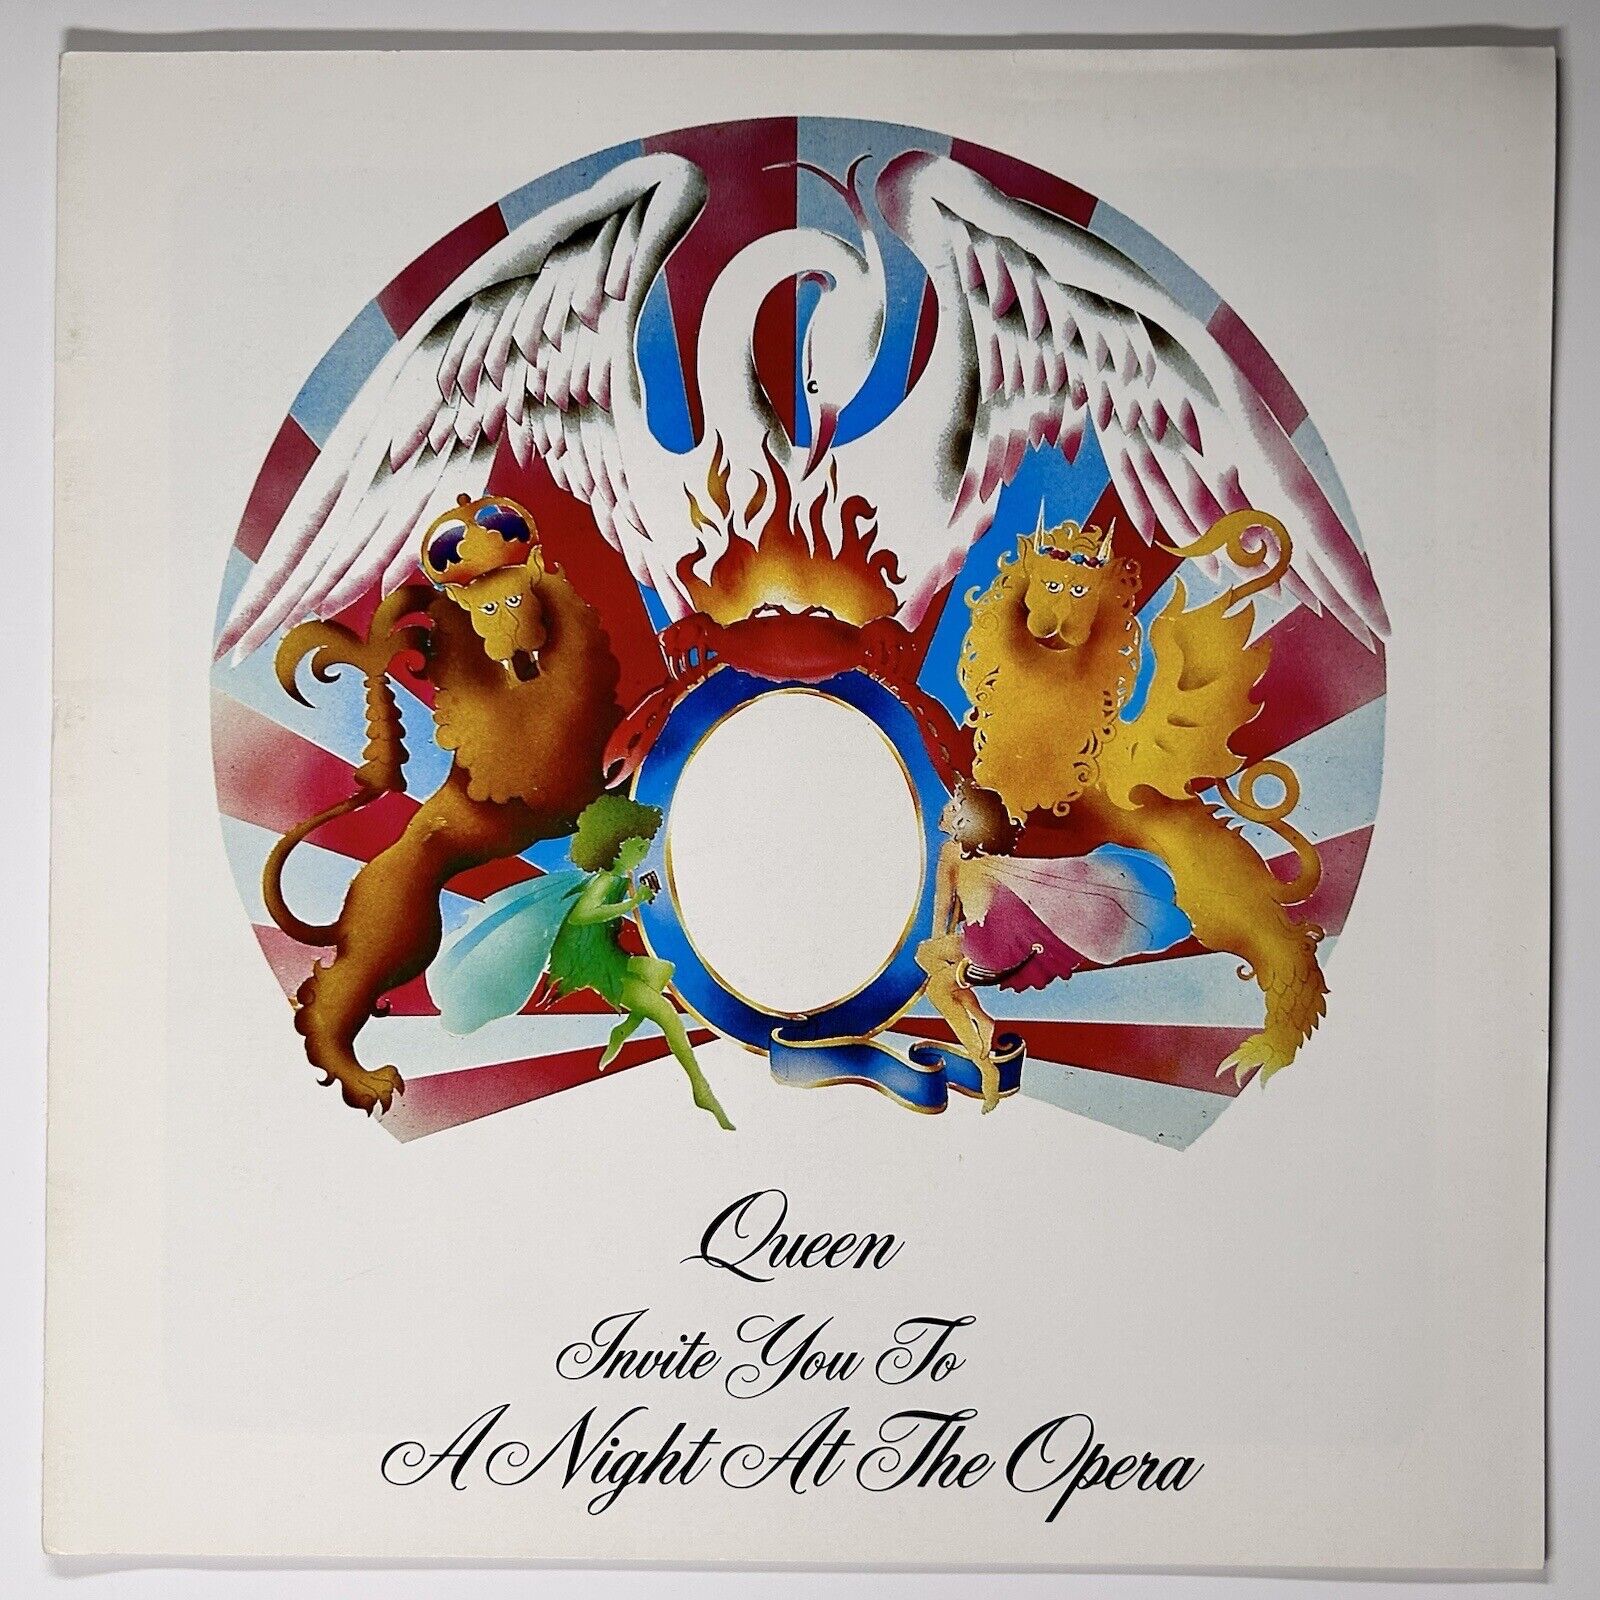 Queen Freddie Mercury Programme Vintage A Night at The Opera US Version 1976